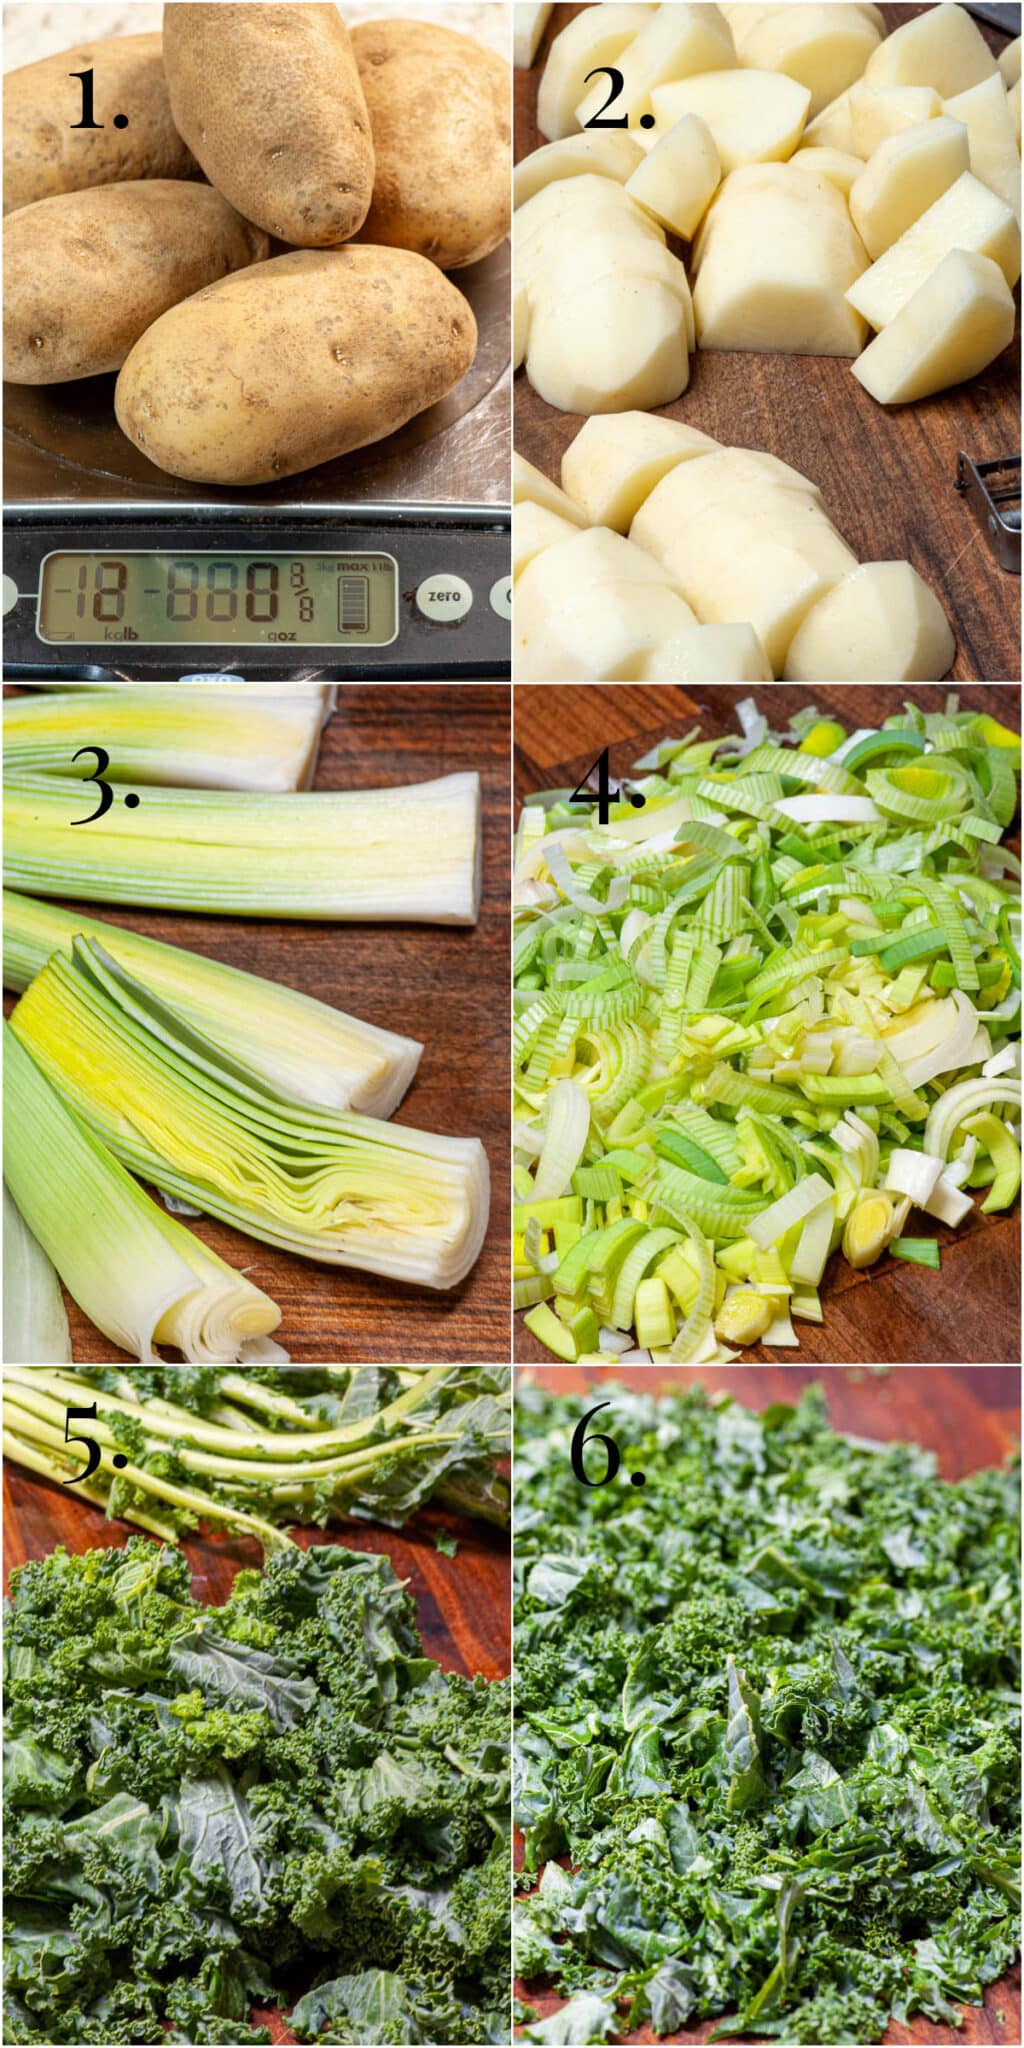 Collage of potato, leeks, and kale preparation.